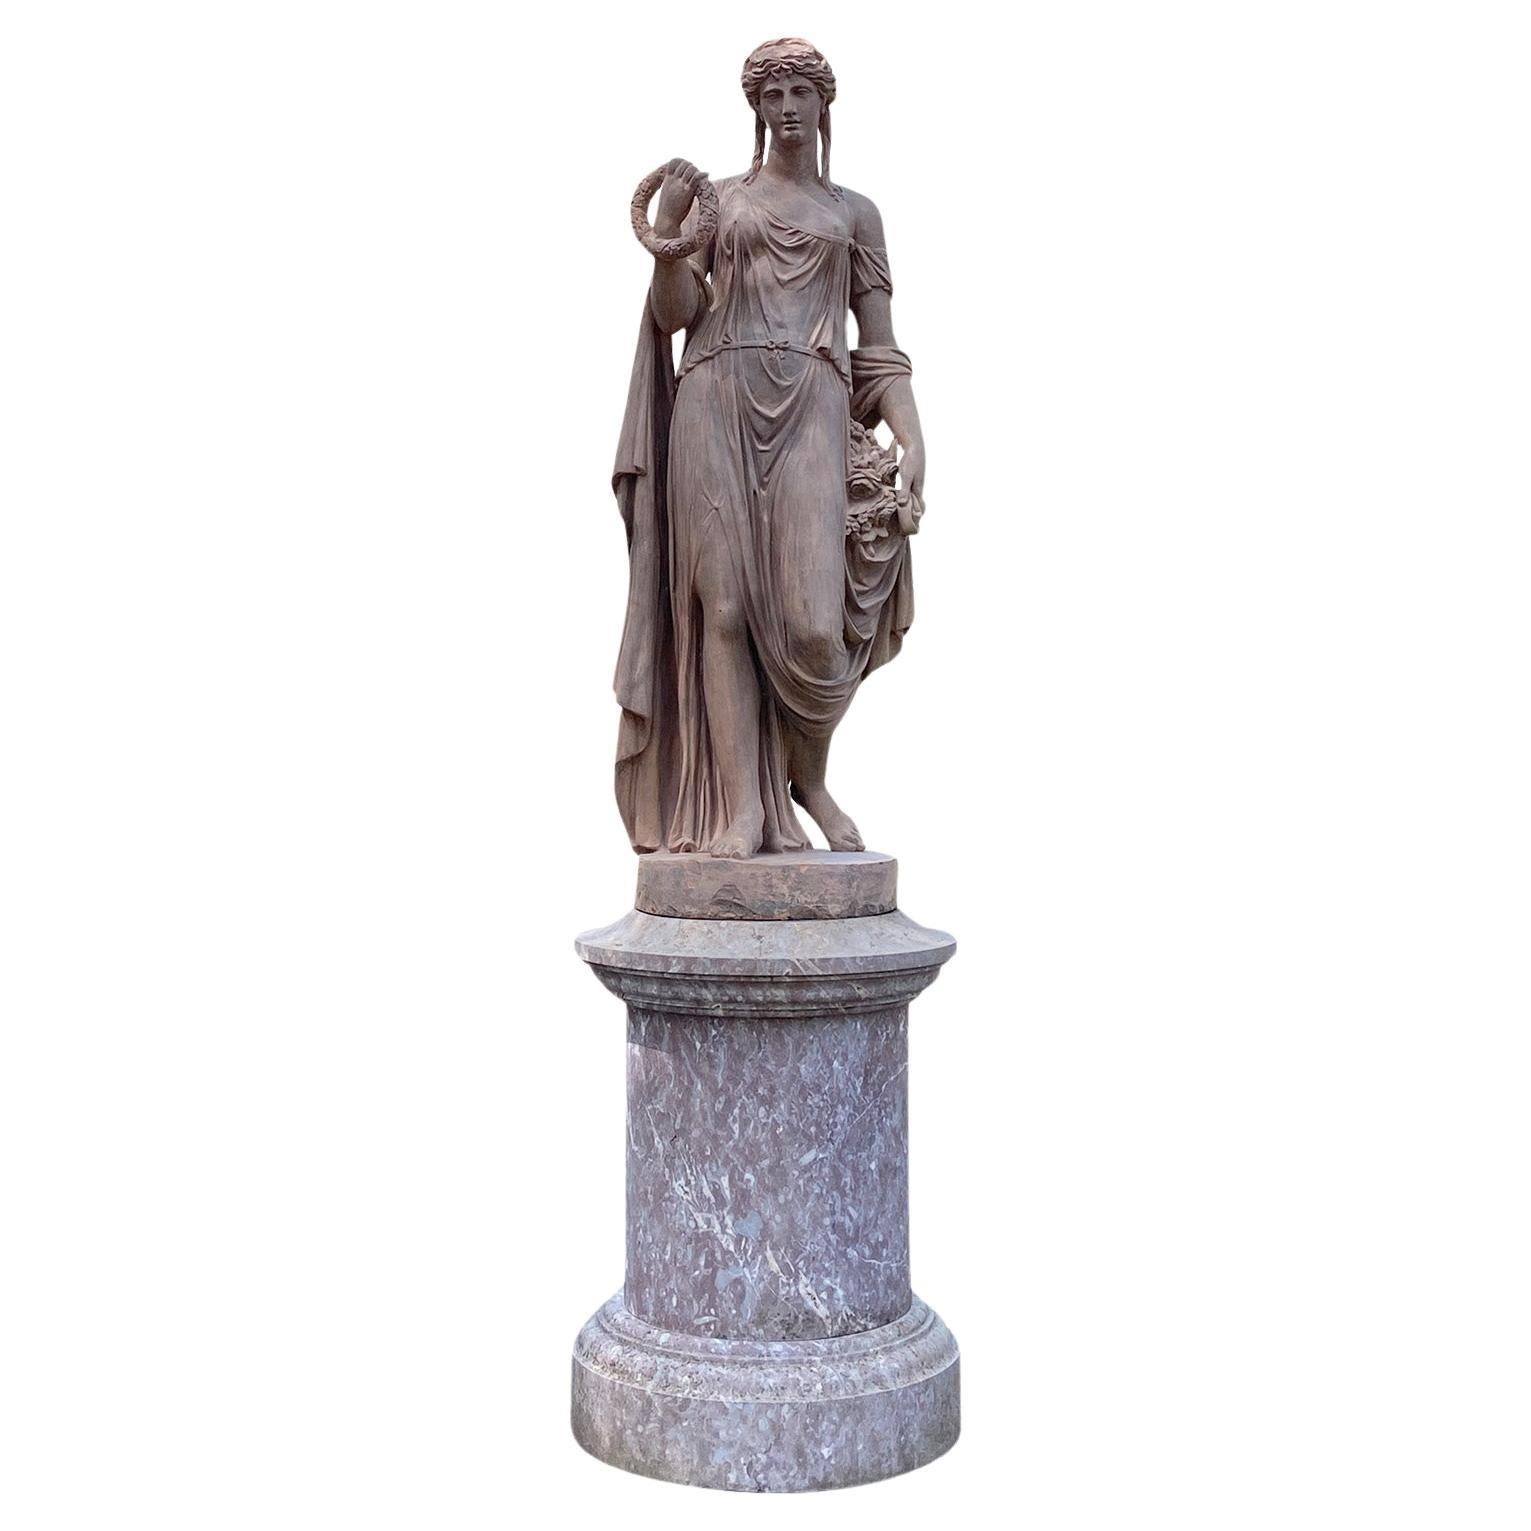 A Terracotta Statue representing the Goddess Flora on Pedestal